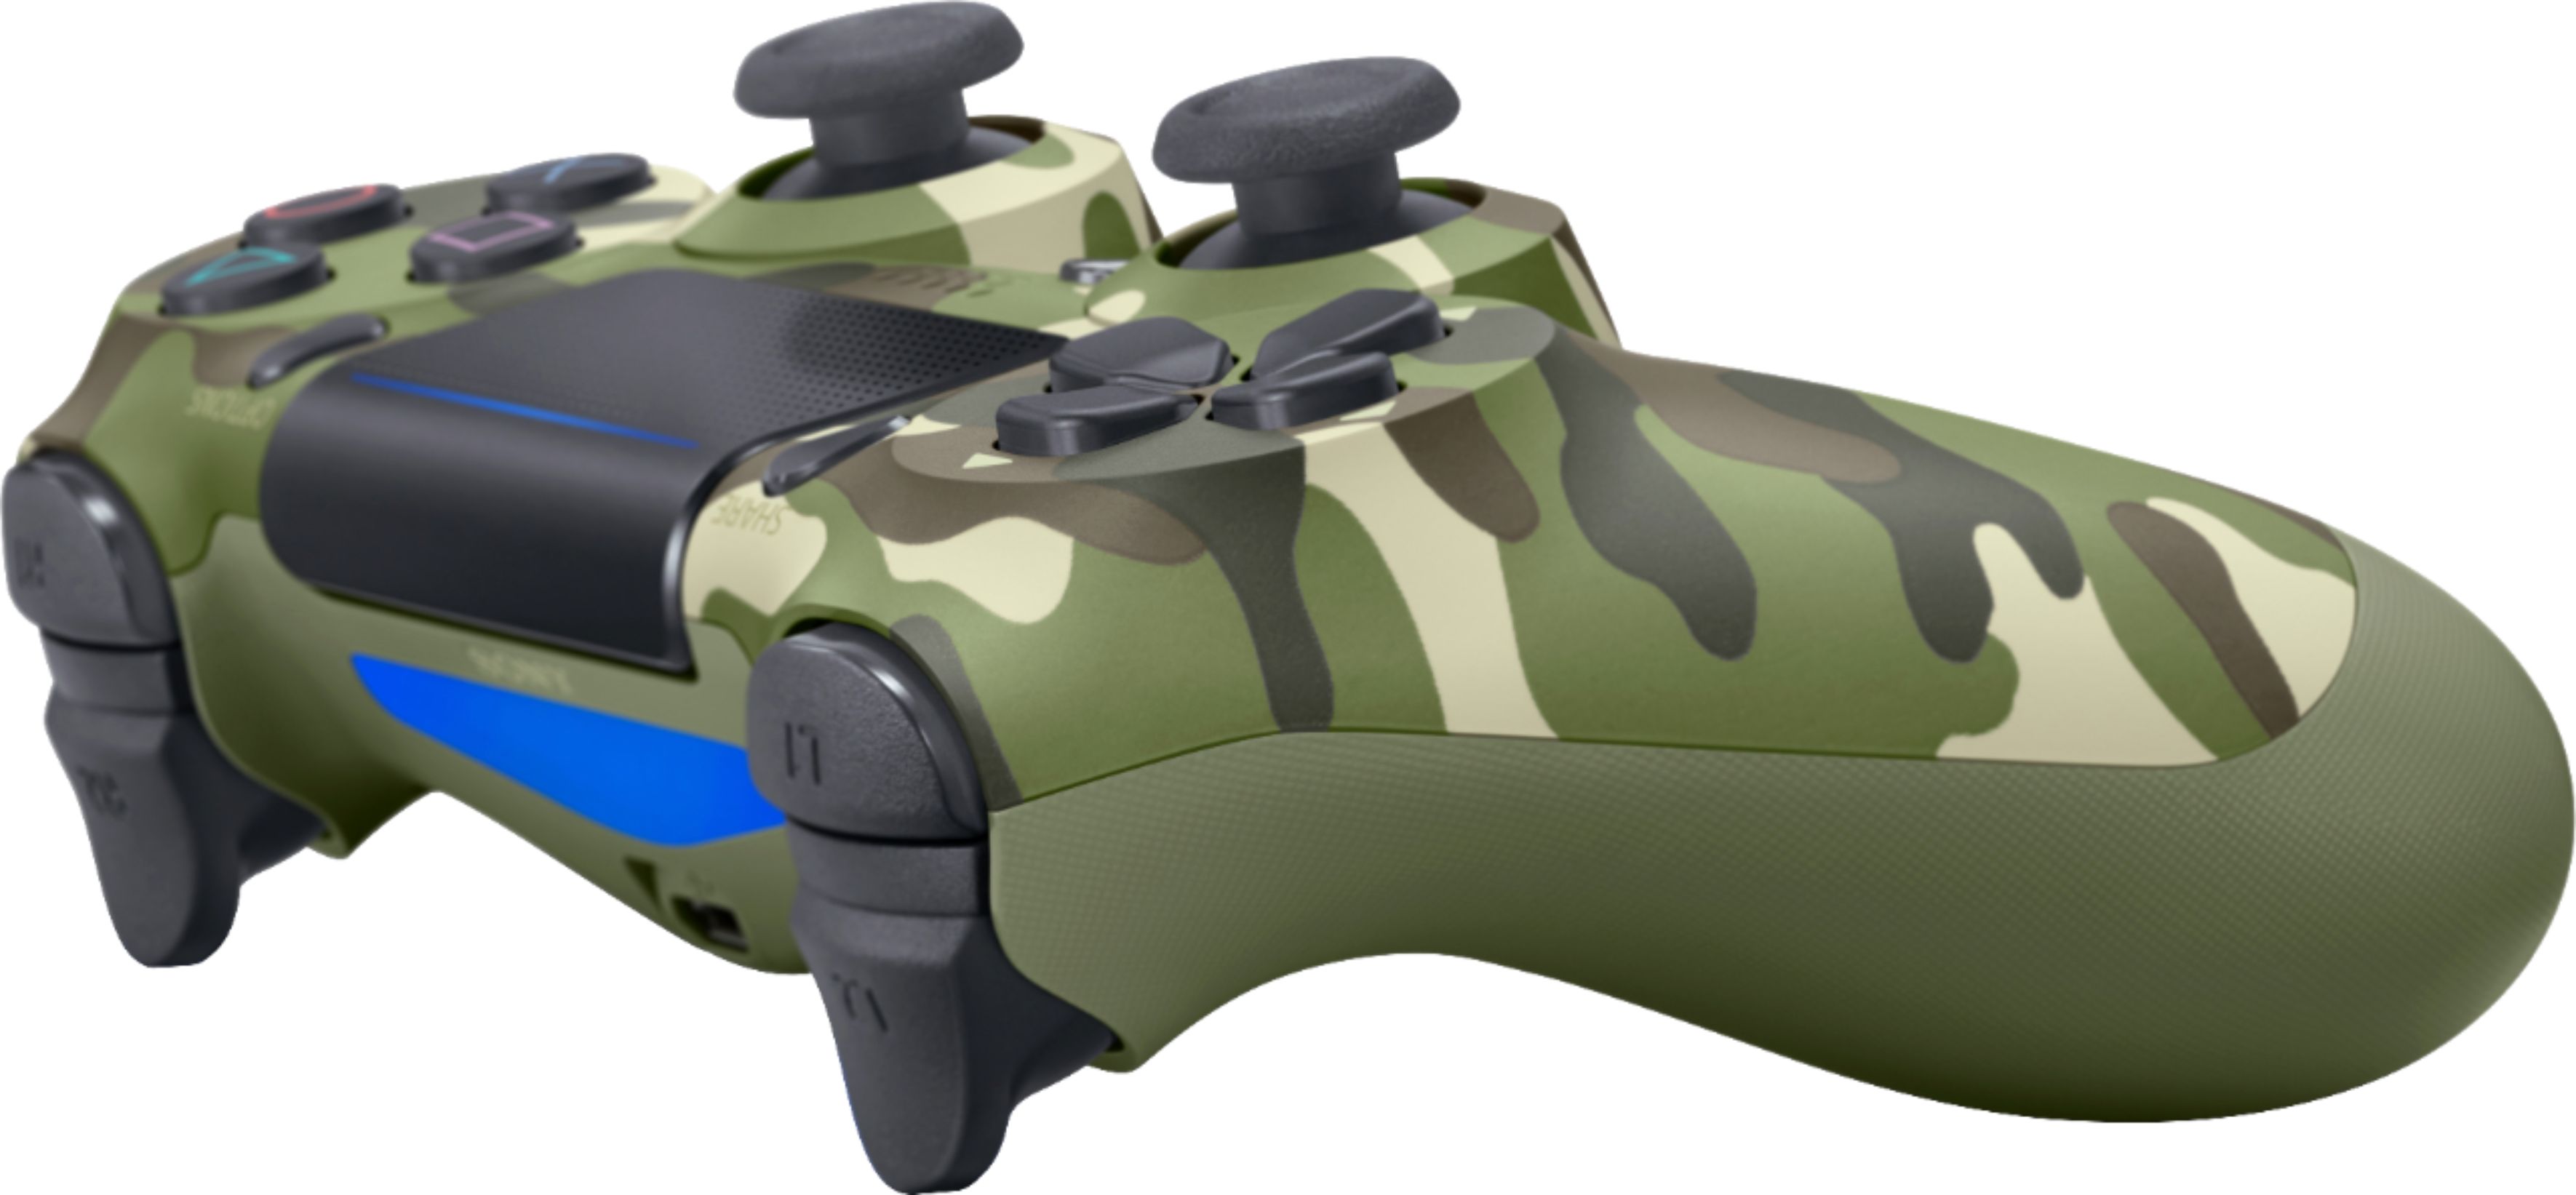 Sudan Fortælle program DualShock 4 Wireless Controller for Sony PlayStation 4 Green Camouflage  3001544 - Best Buy